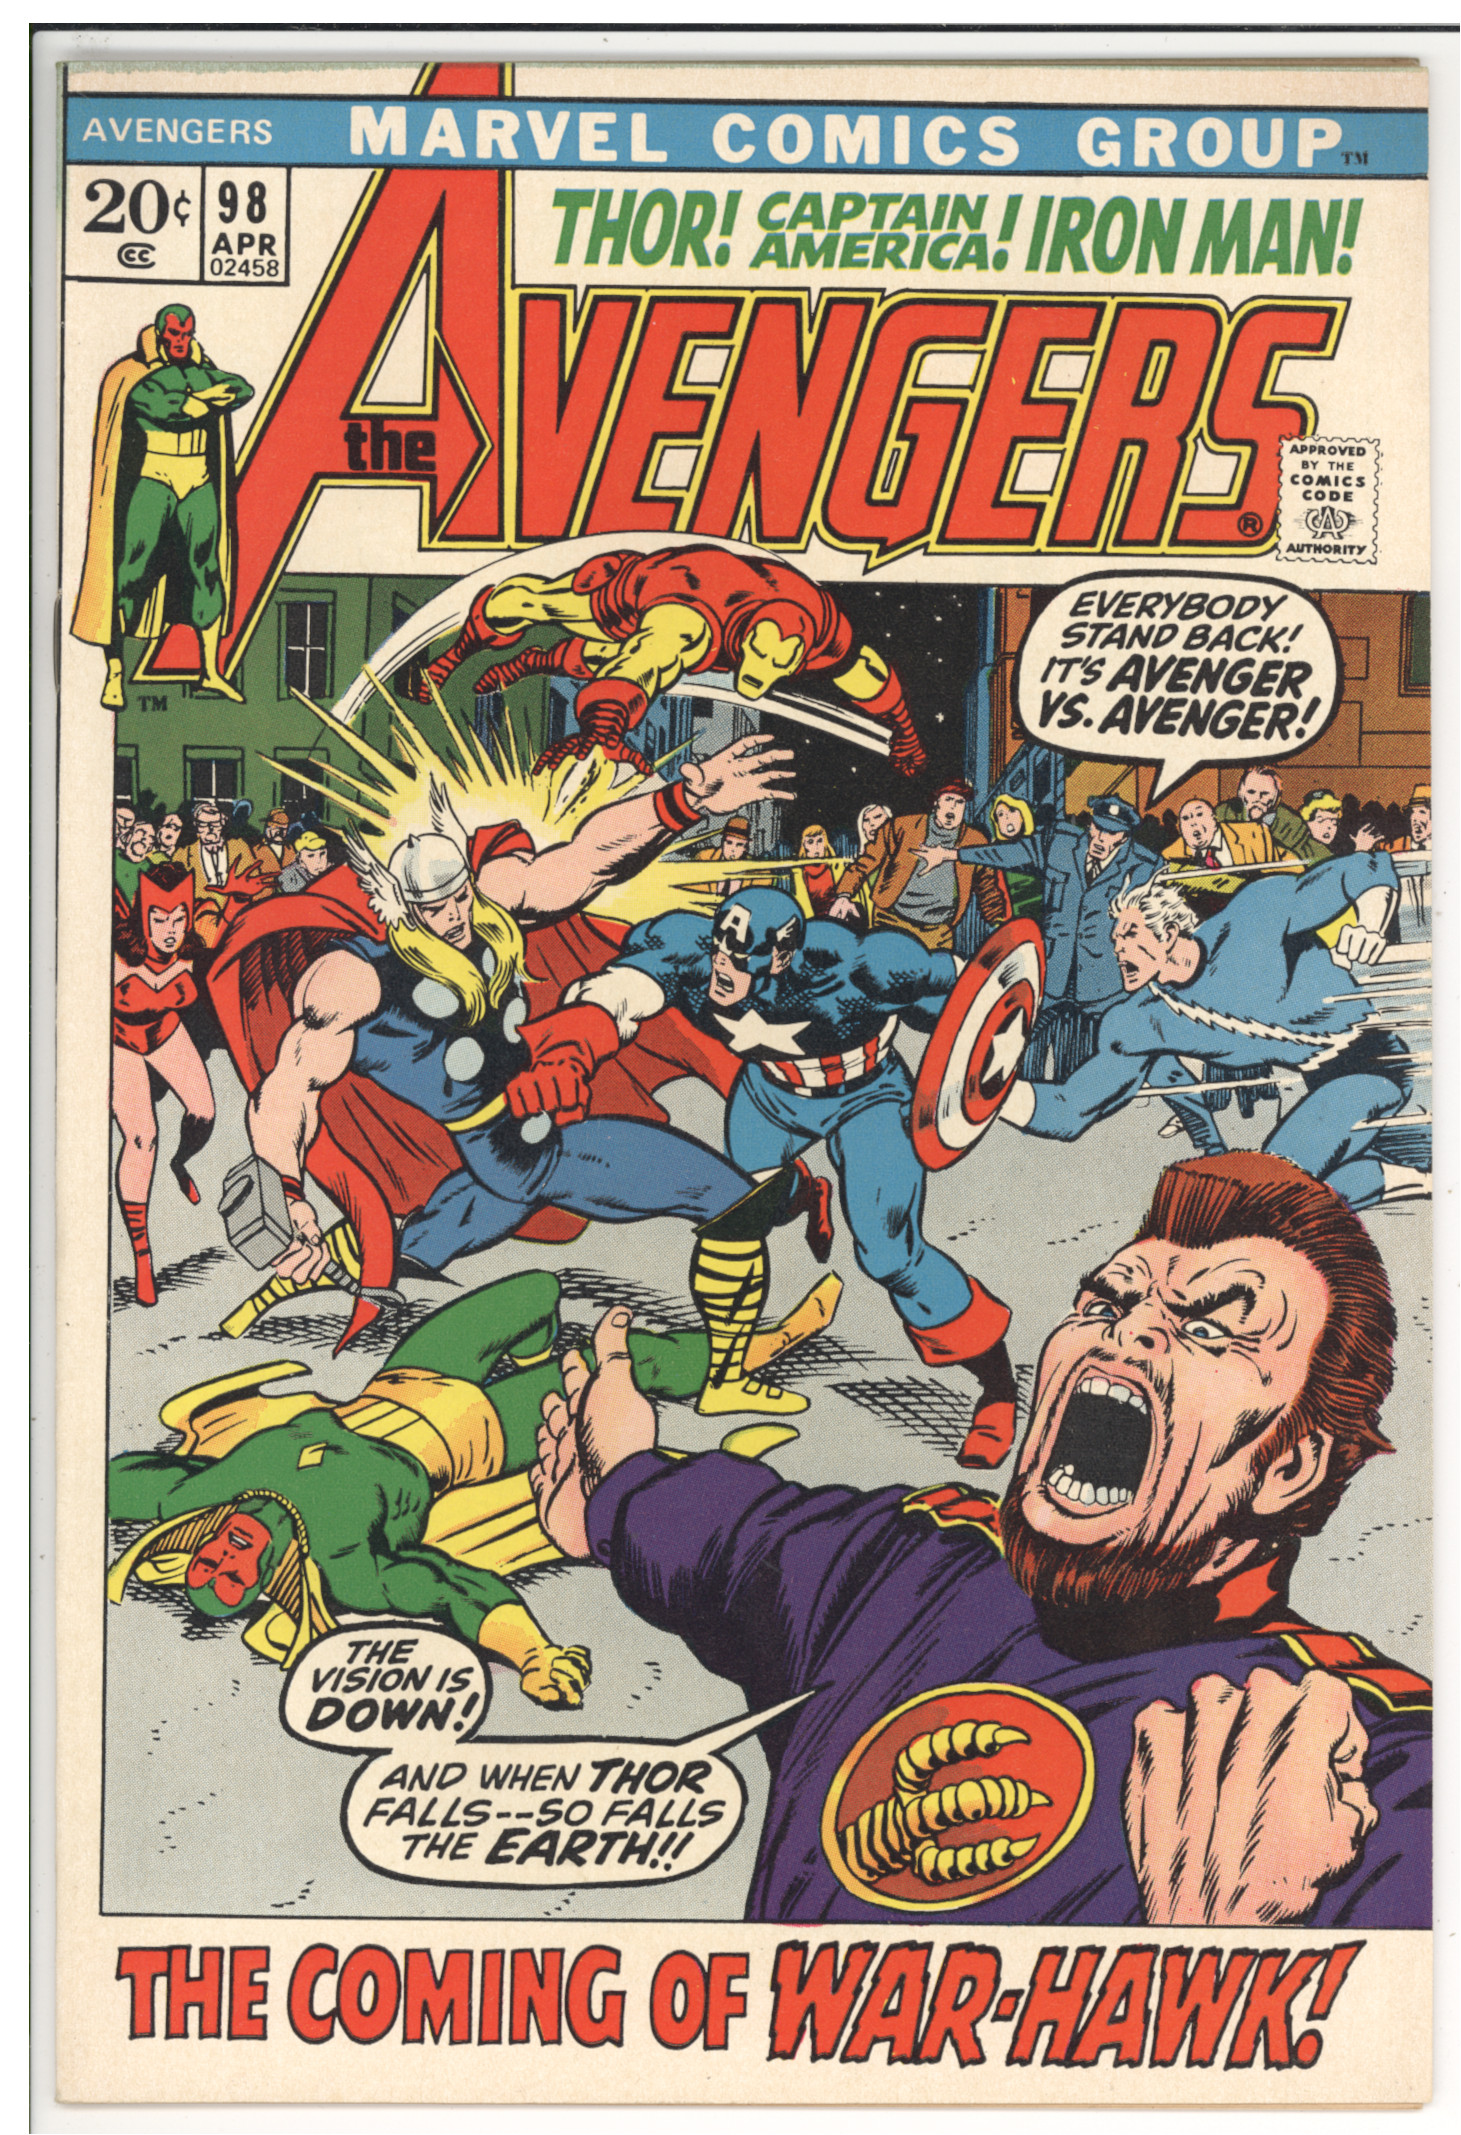 Avengers #98 front